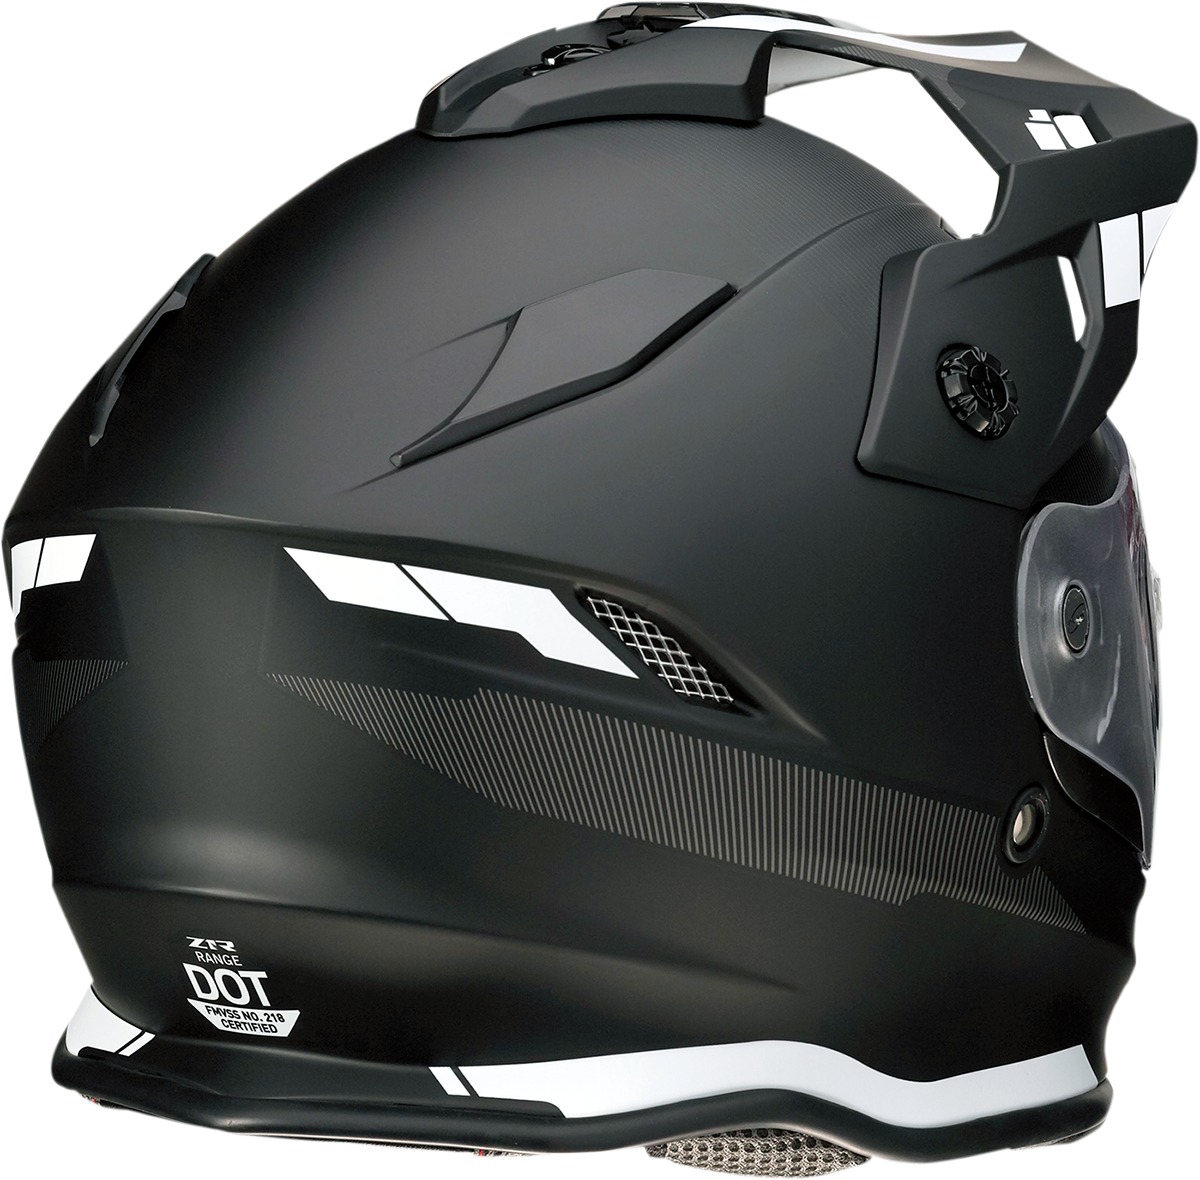 Range Dual Sport Helmet Large - Uptake Black/White - Click Image to Close